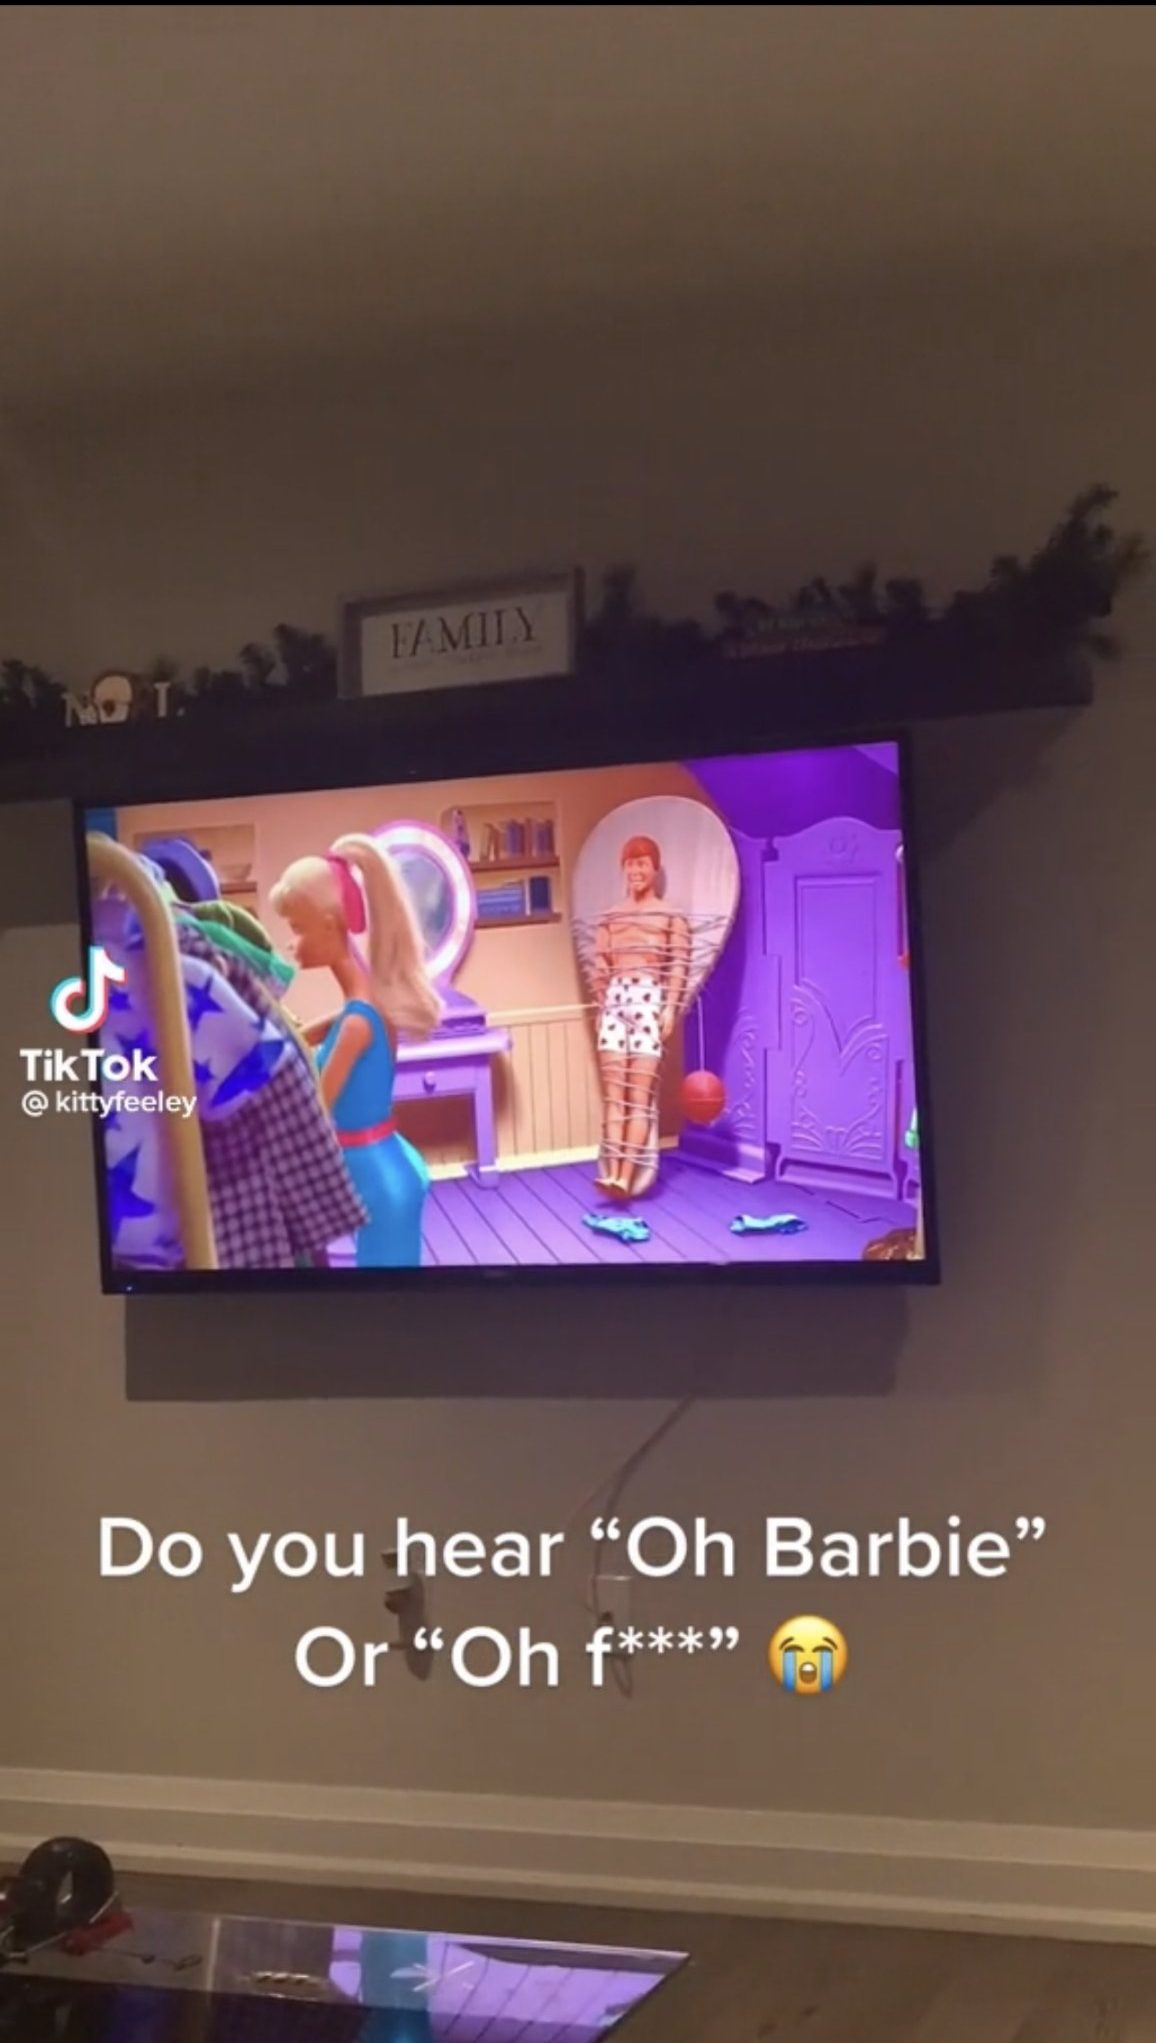 Barbie audio illusion has people torn